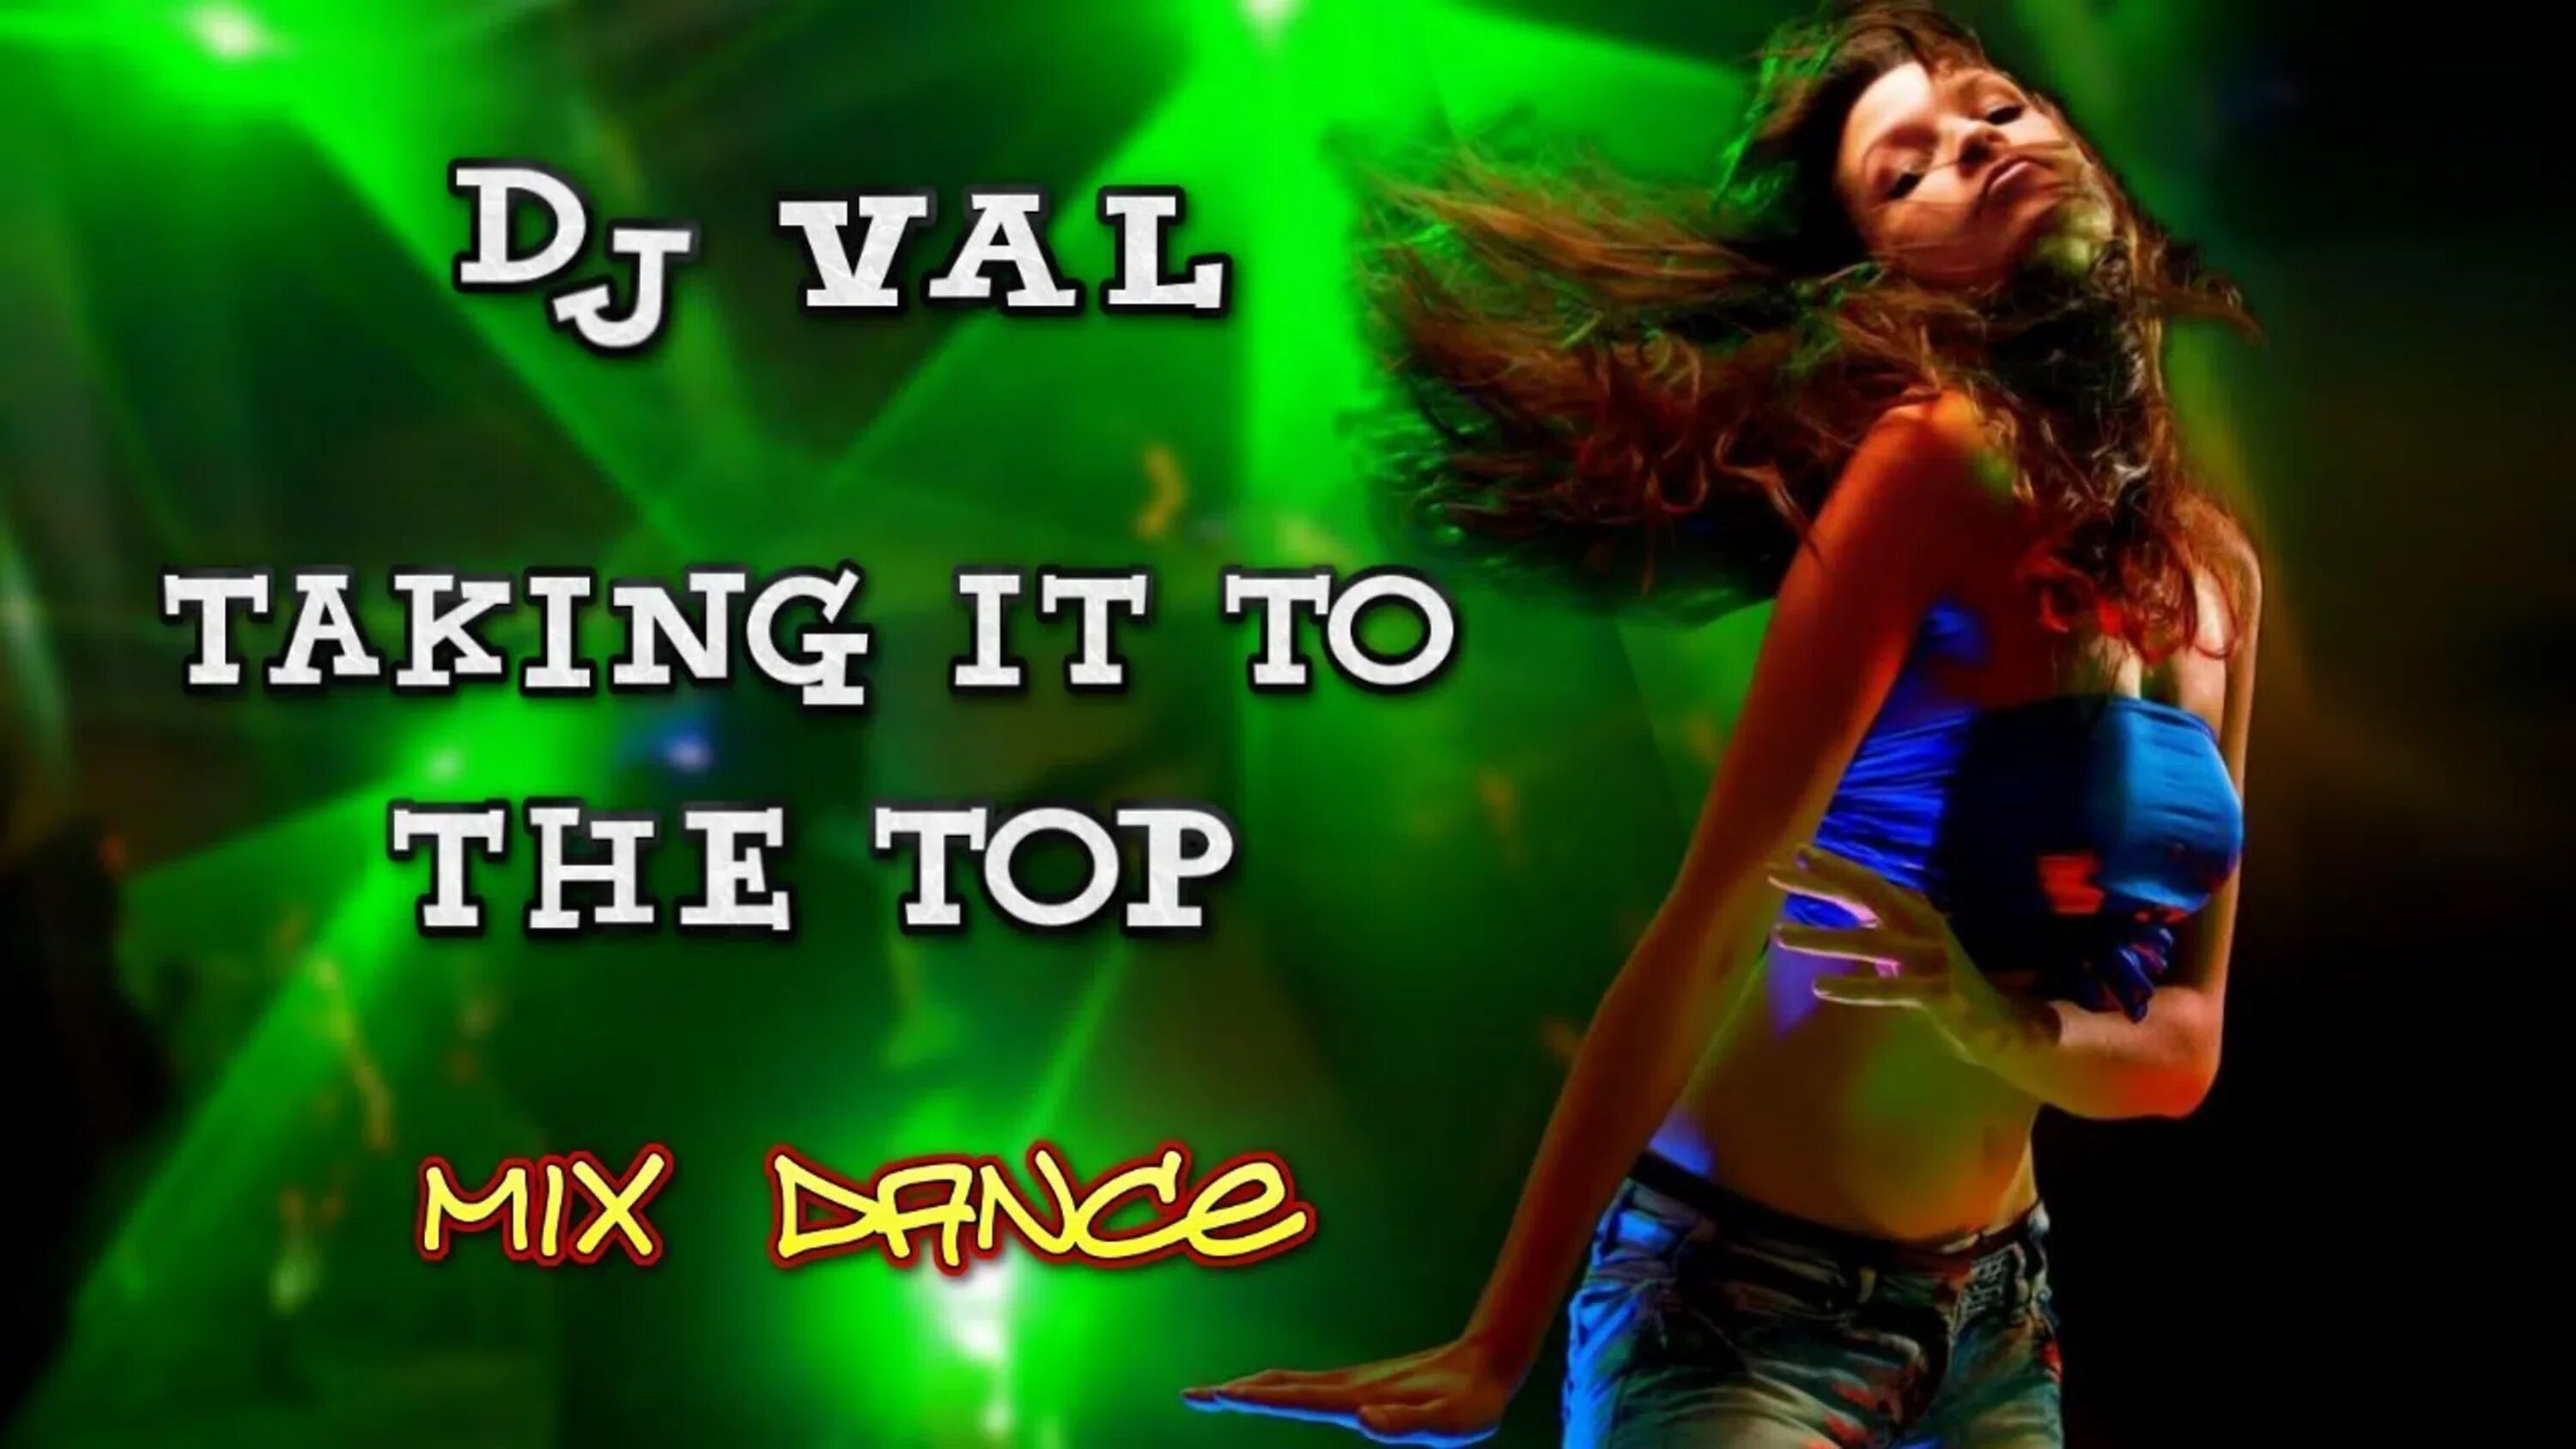 Dj val лучшие песни. DJ Val - taking it to the Top. Евродэнс DJ Val. DJ Val i like. DJ Val Remix.